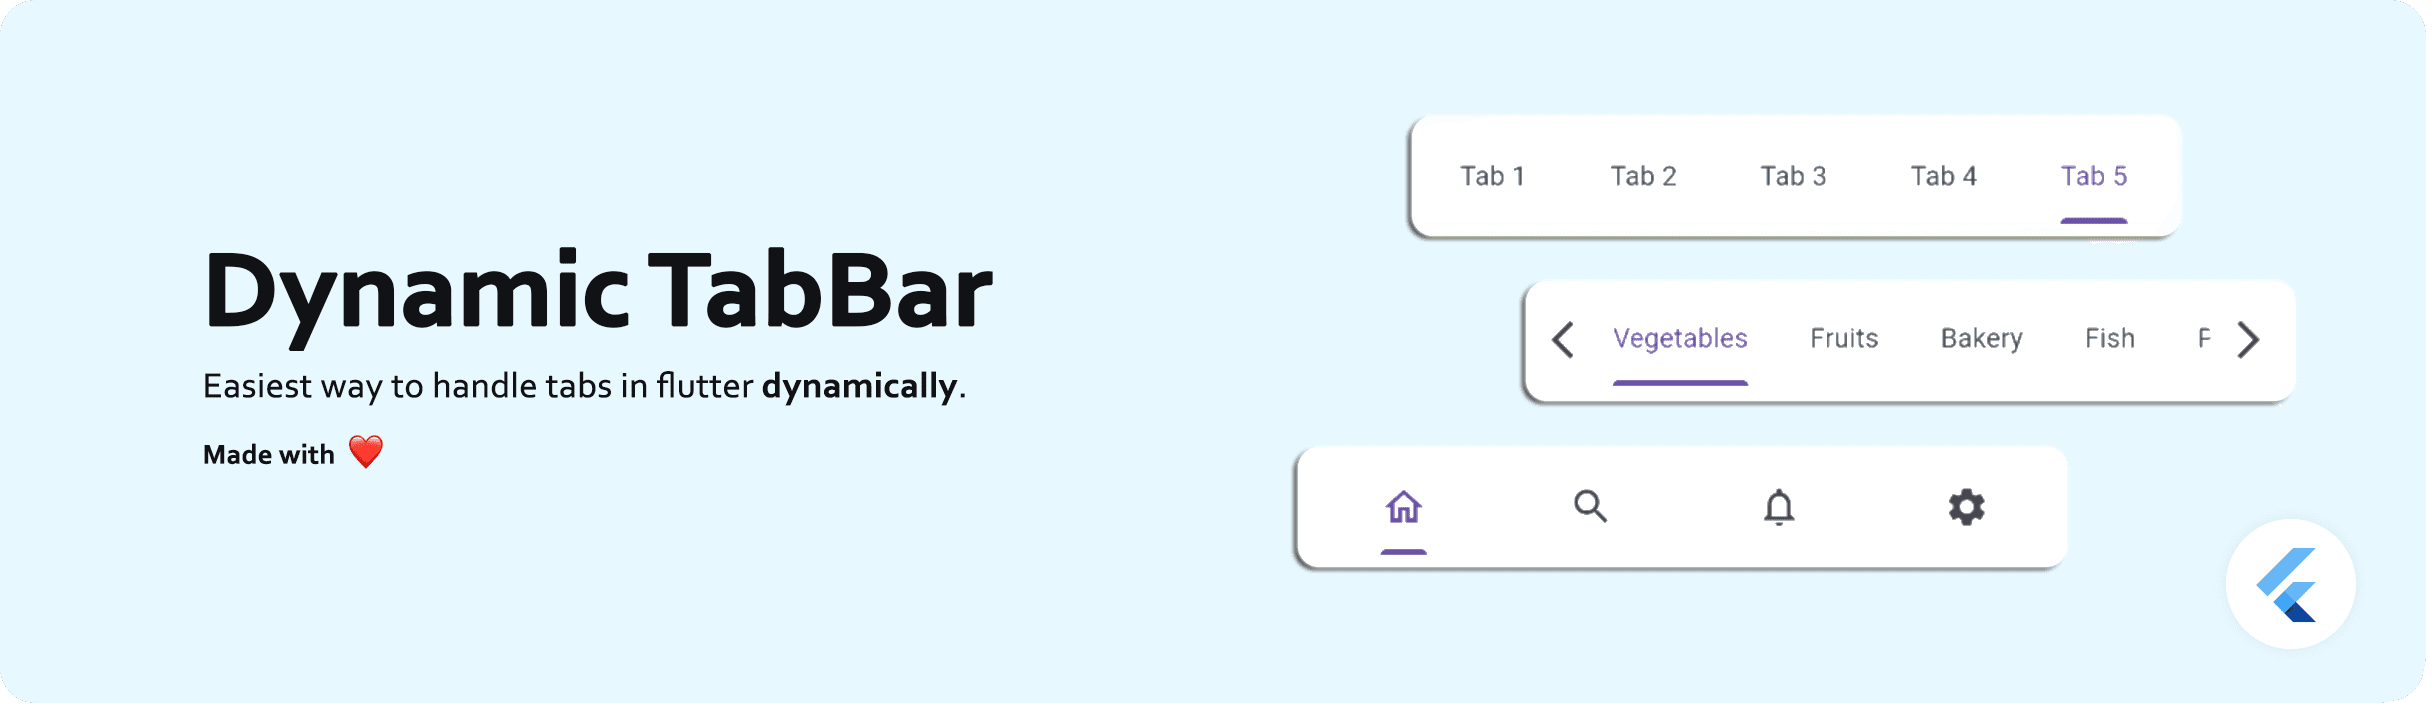 dynamic_tabbar